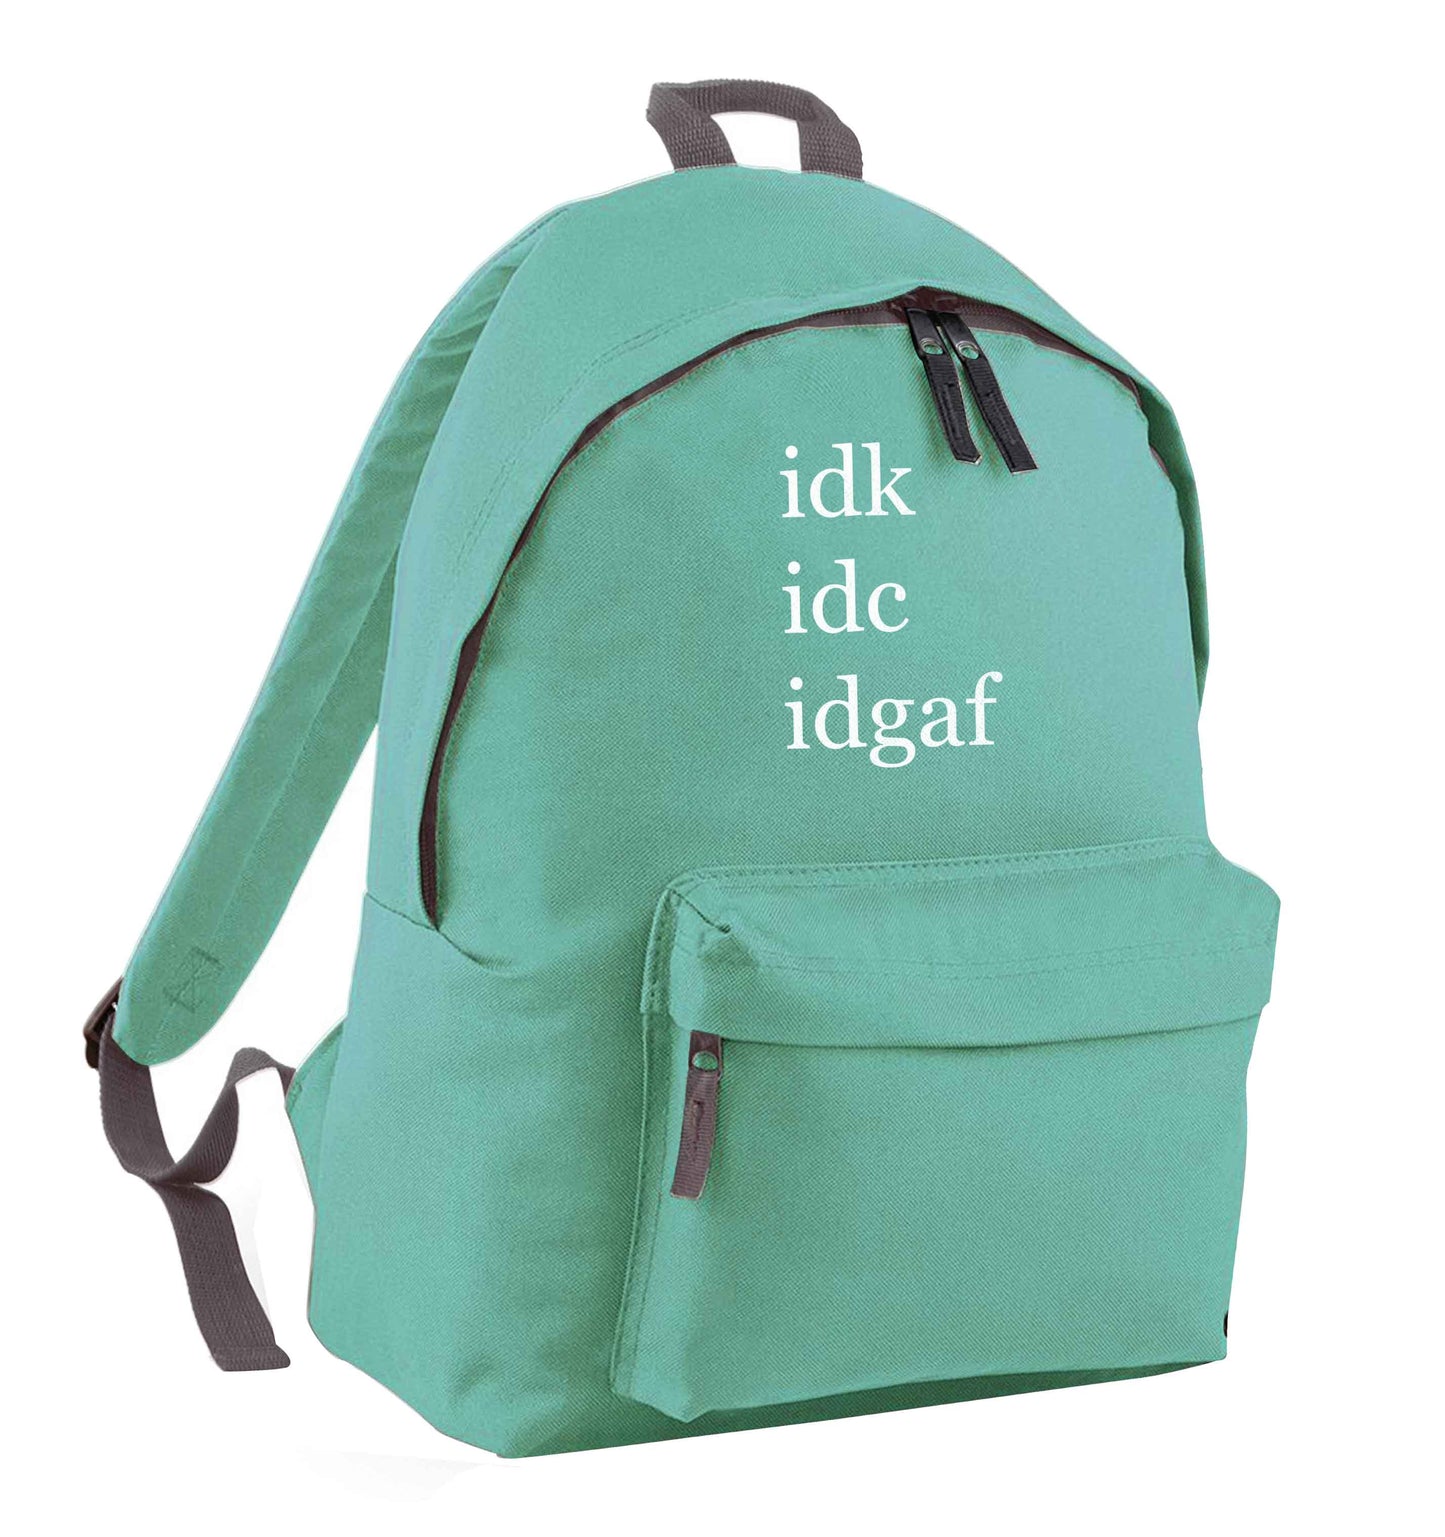 Idk Idc Idgaf mint adults backpack